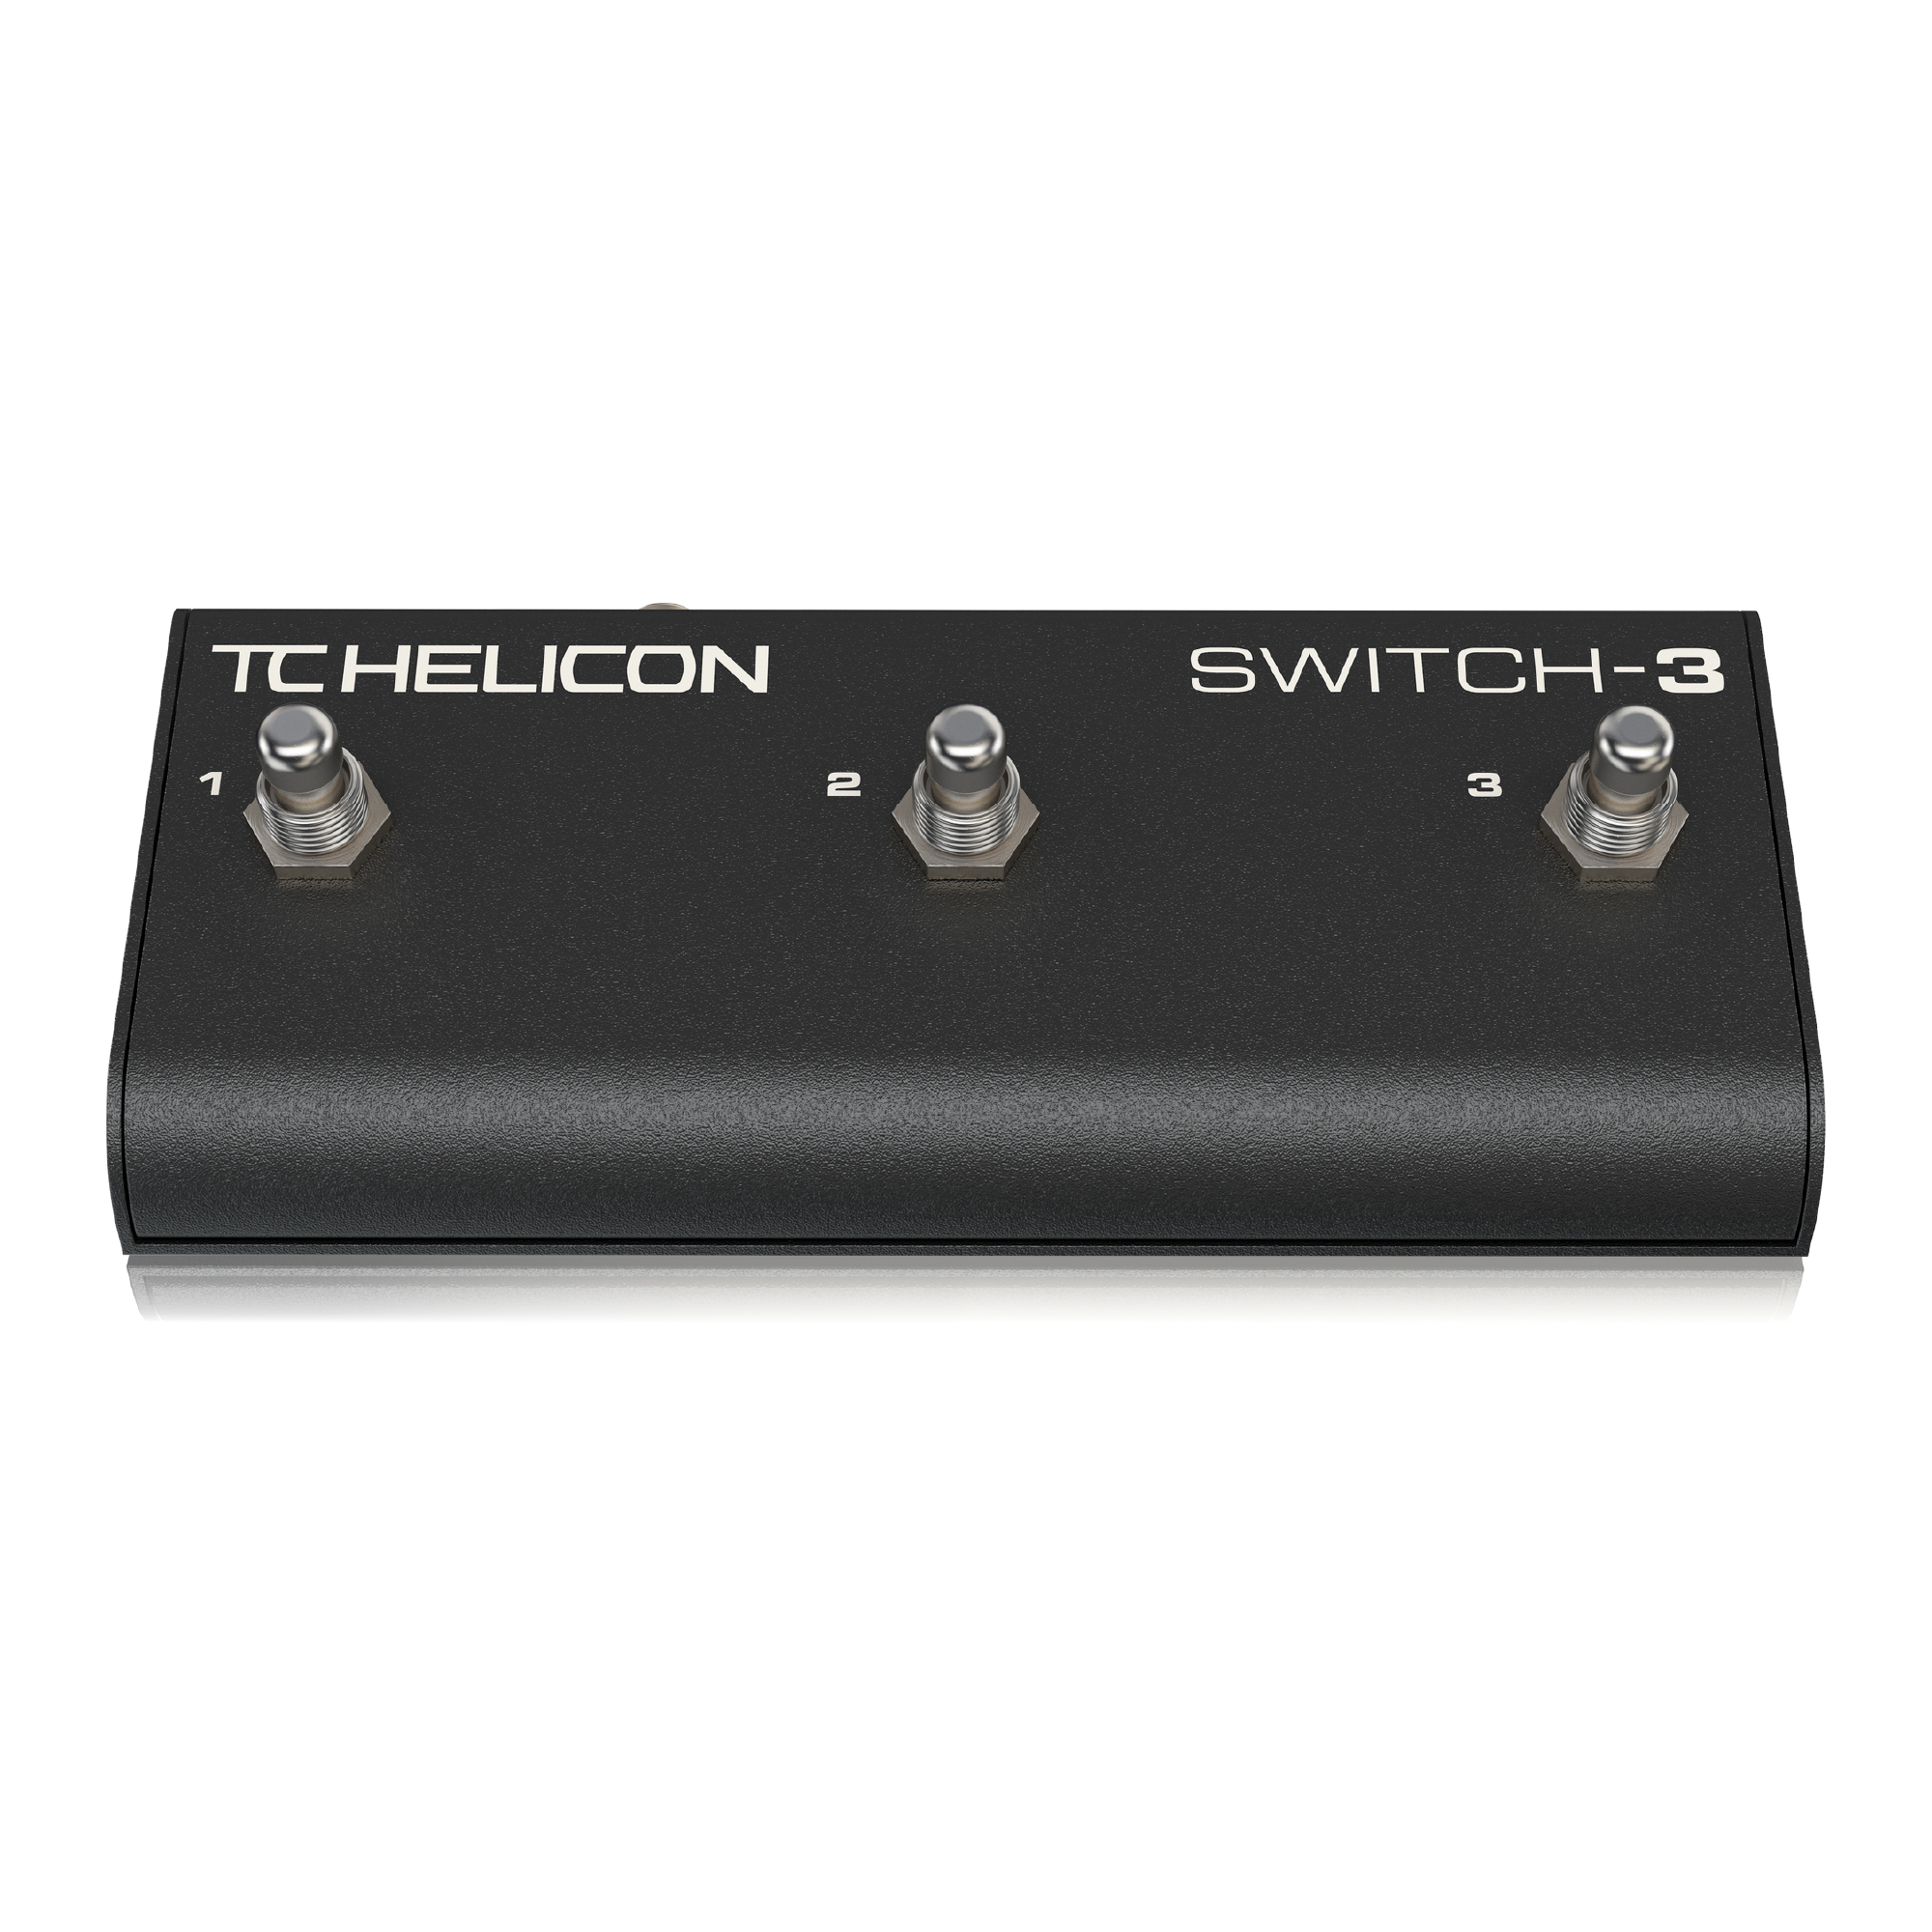 TC Helicon SWITCH-3 - 株式会社エレクトリ